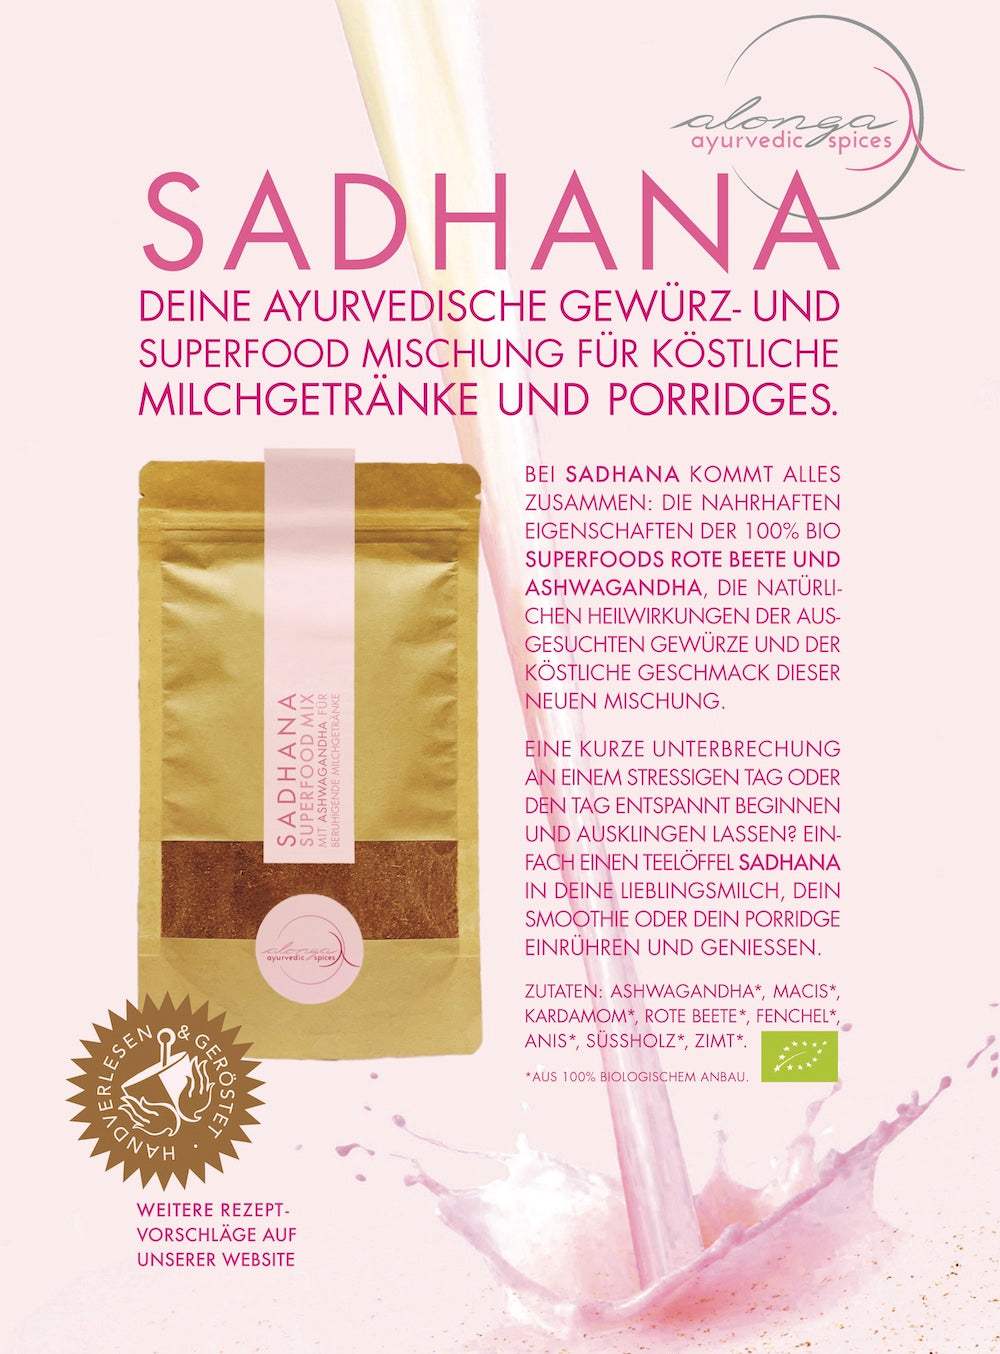 Sadhana Superfood Mix